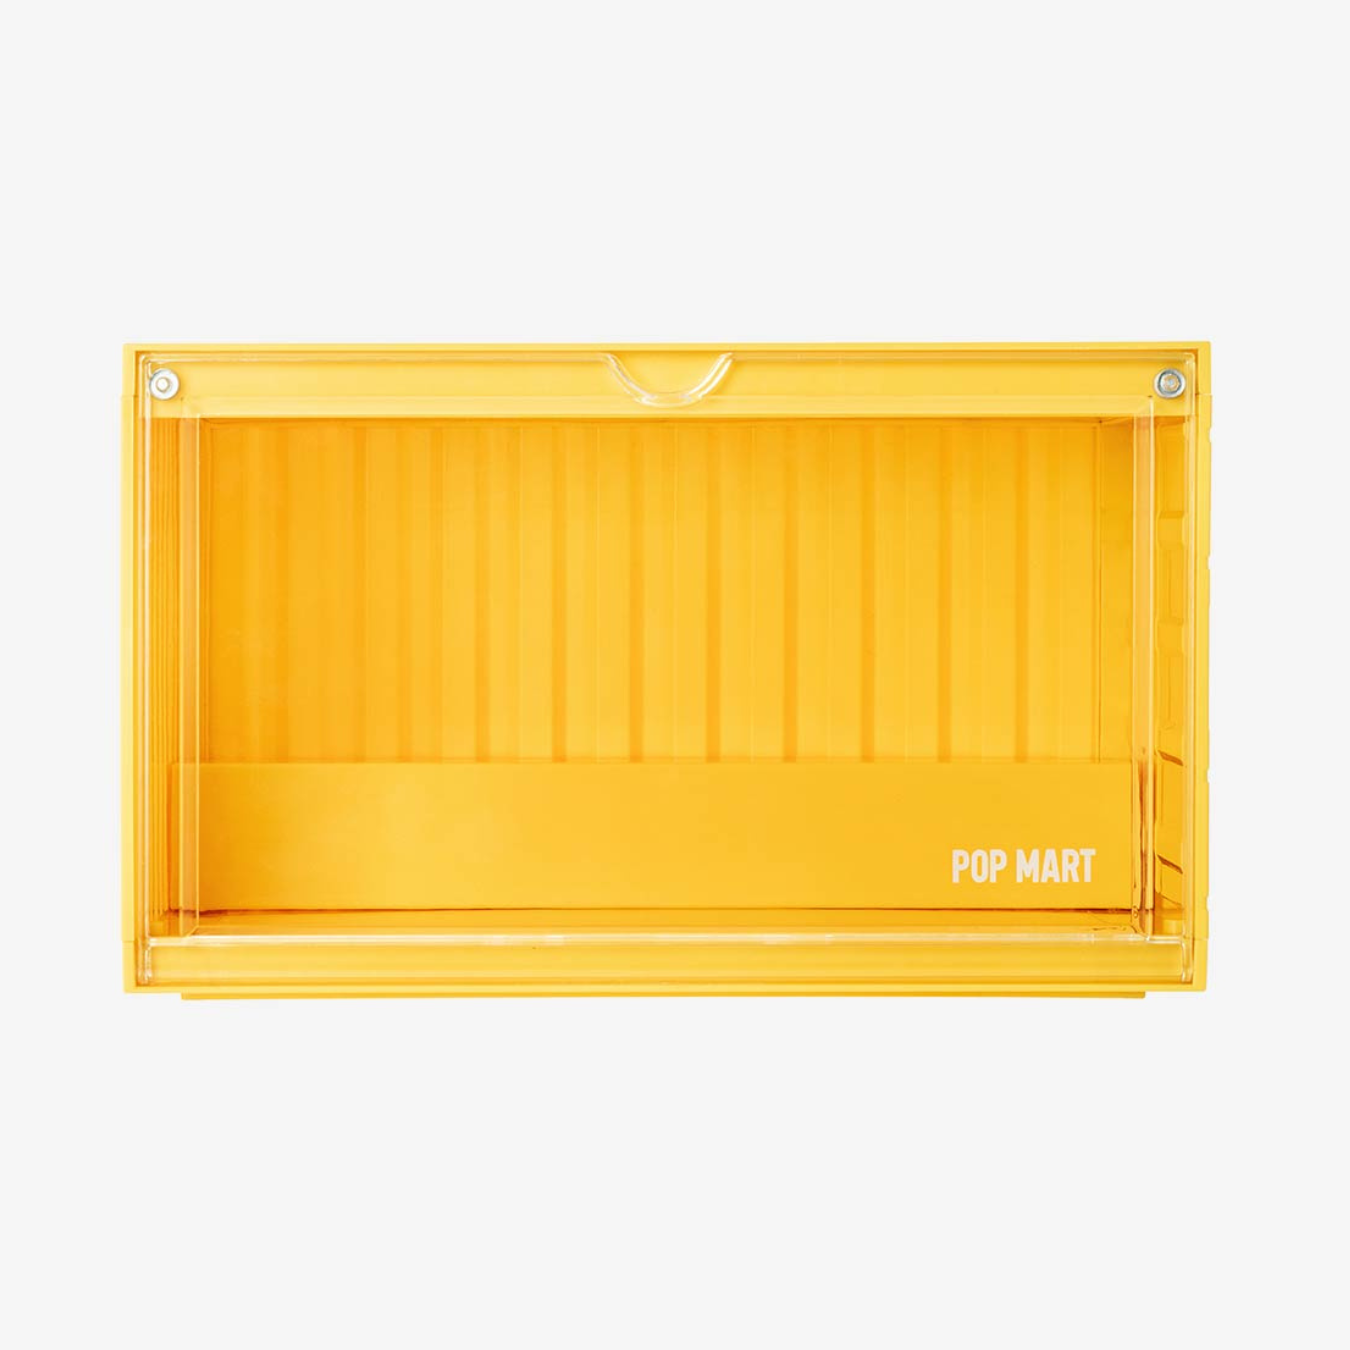 【MINI】POP MART MINI Display Container - YELLOW